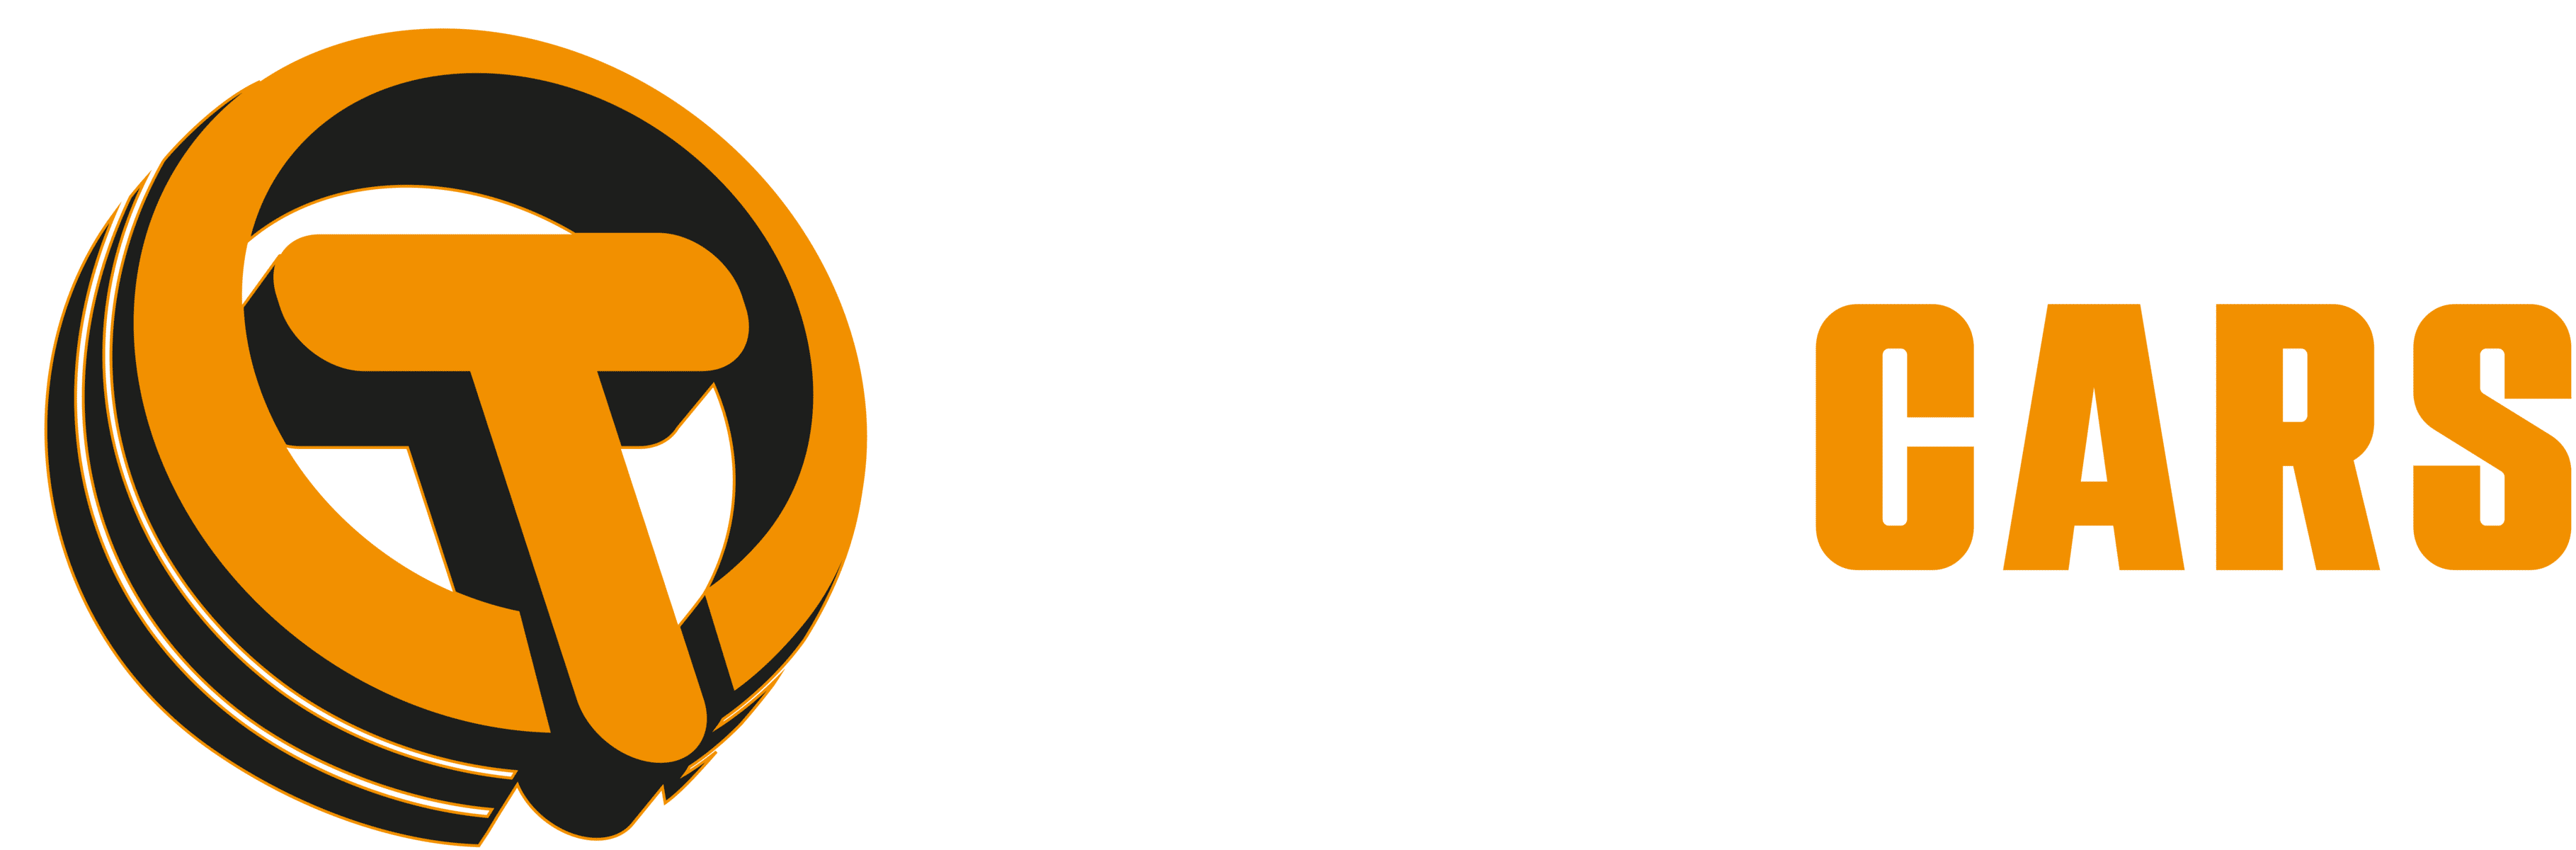 Trubicars Logo